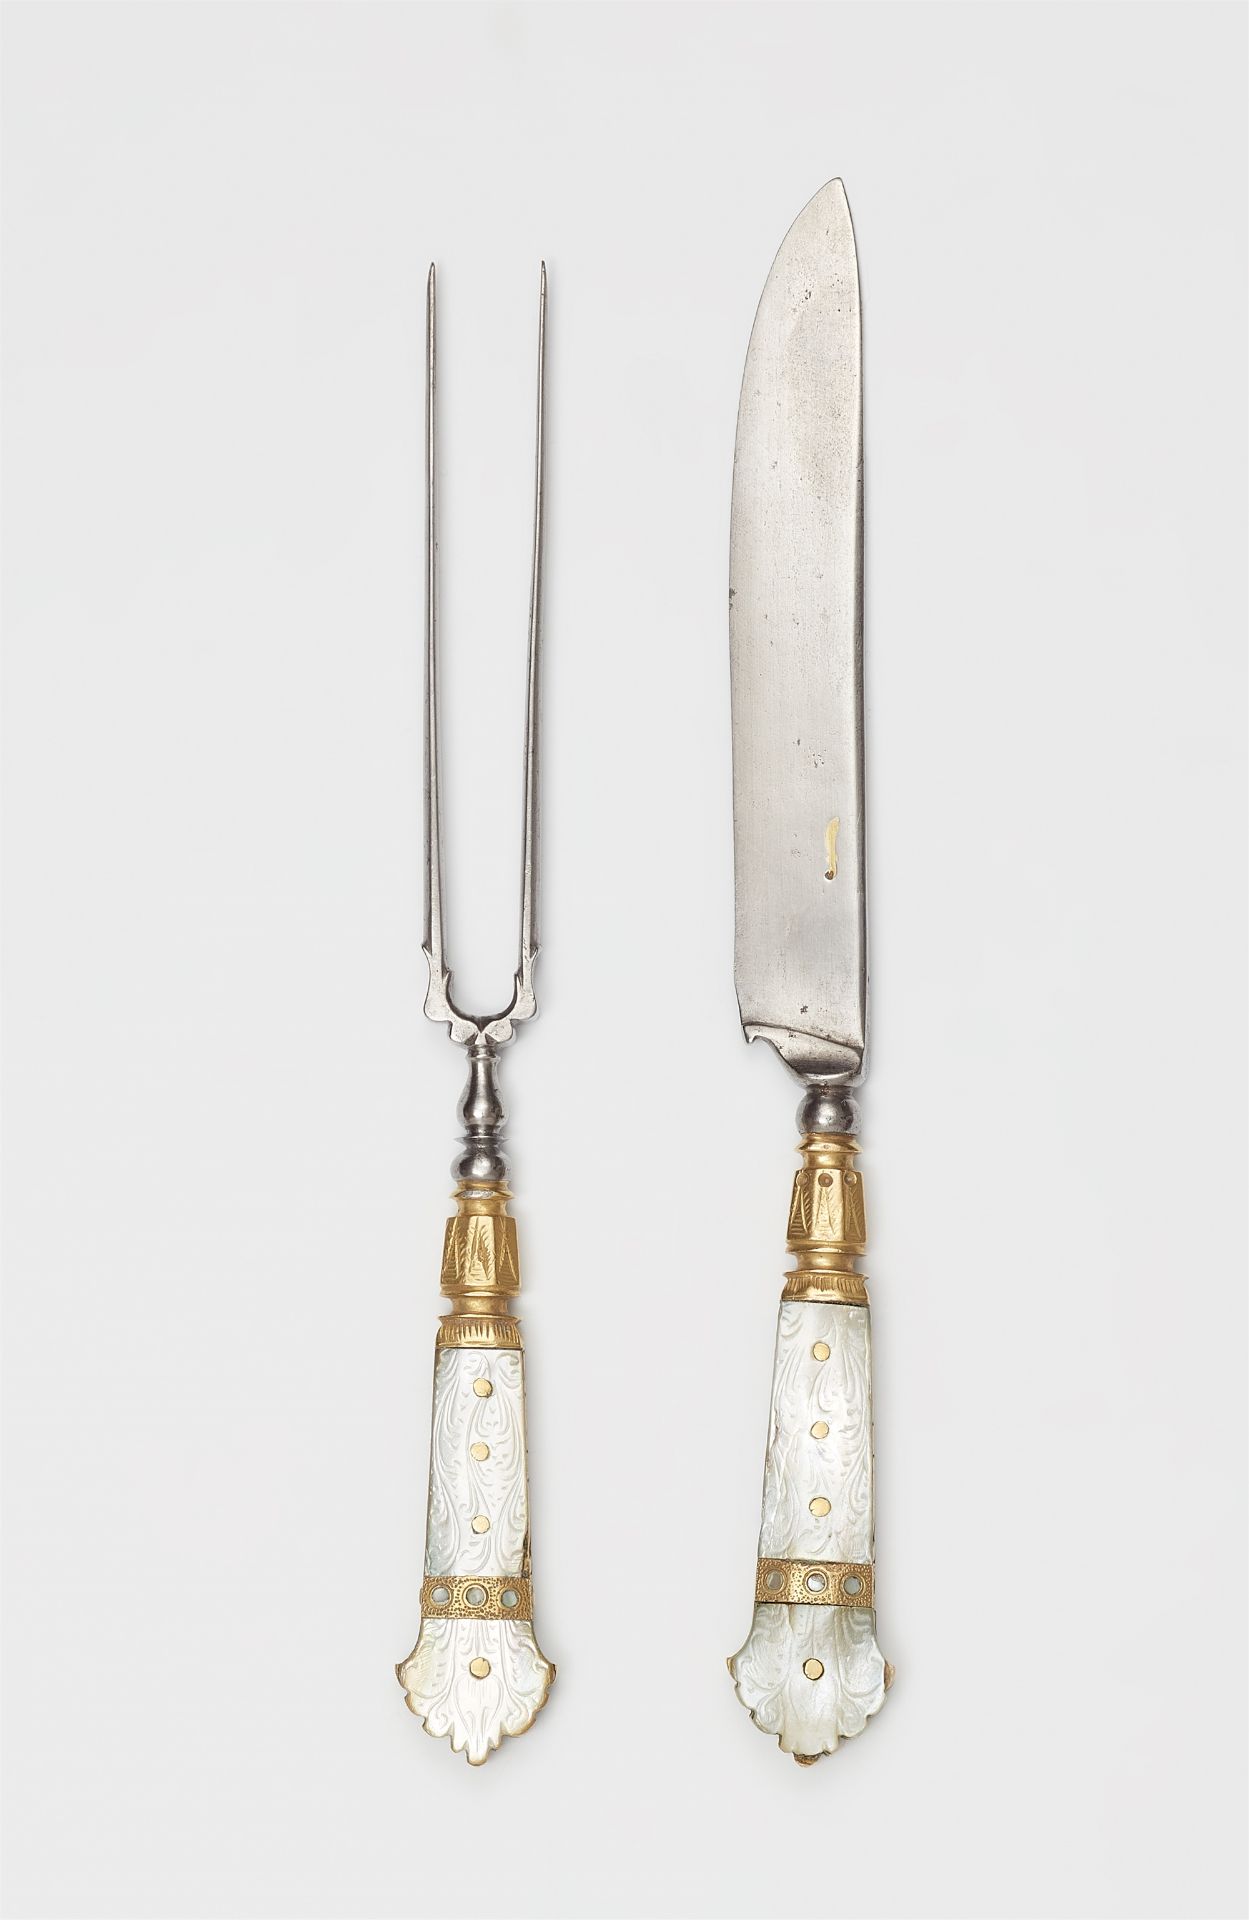 A Haban inlaid cutlery set